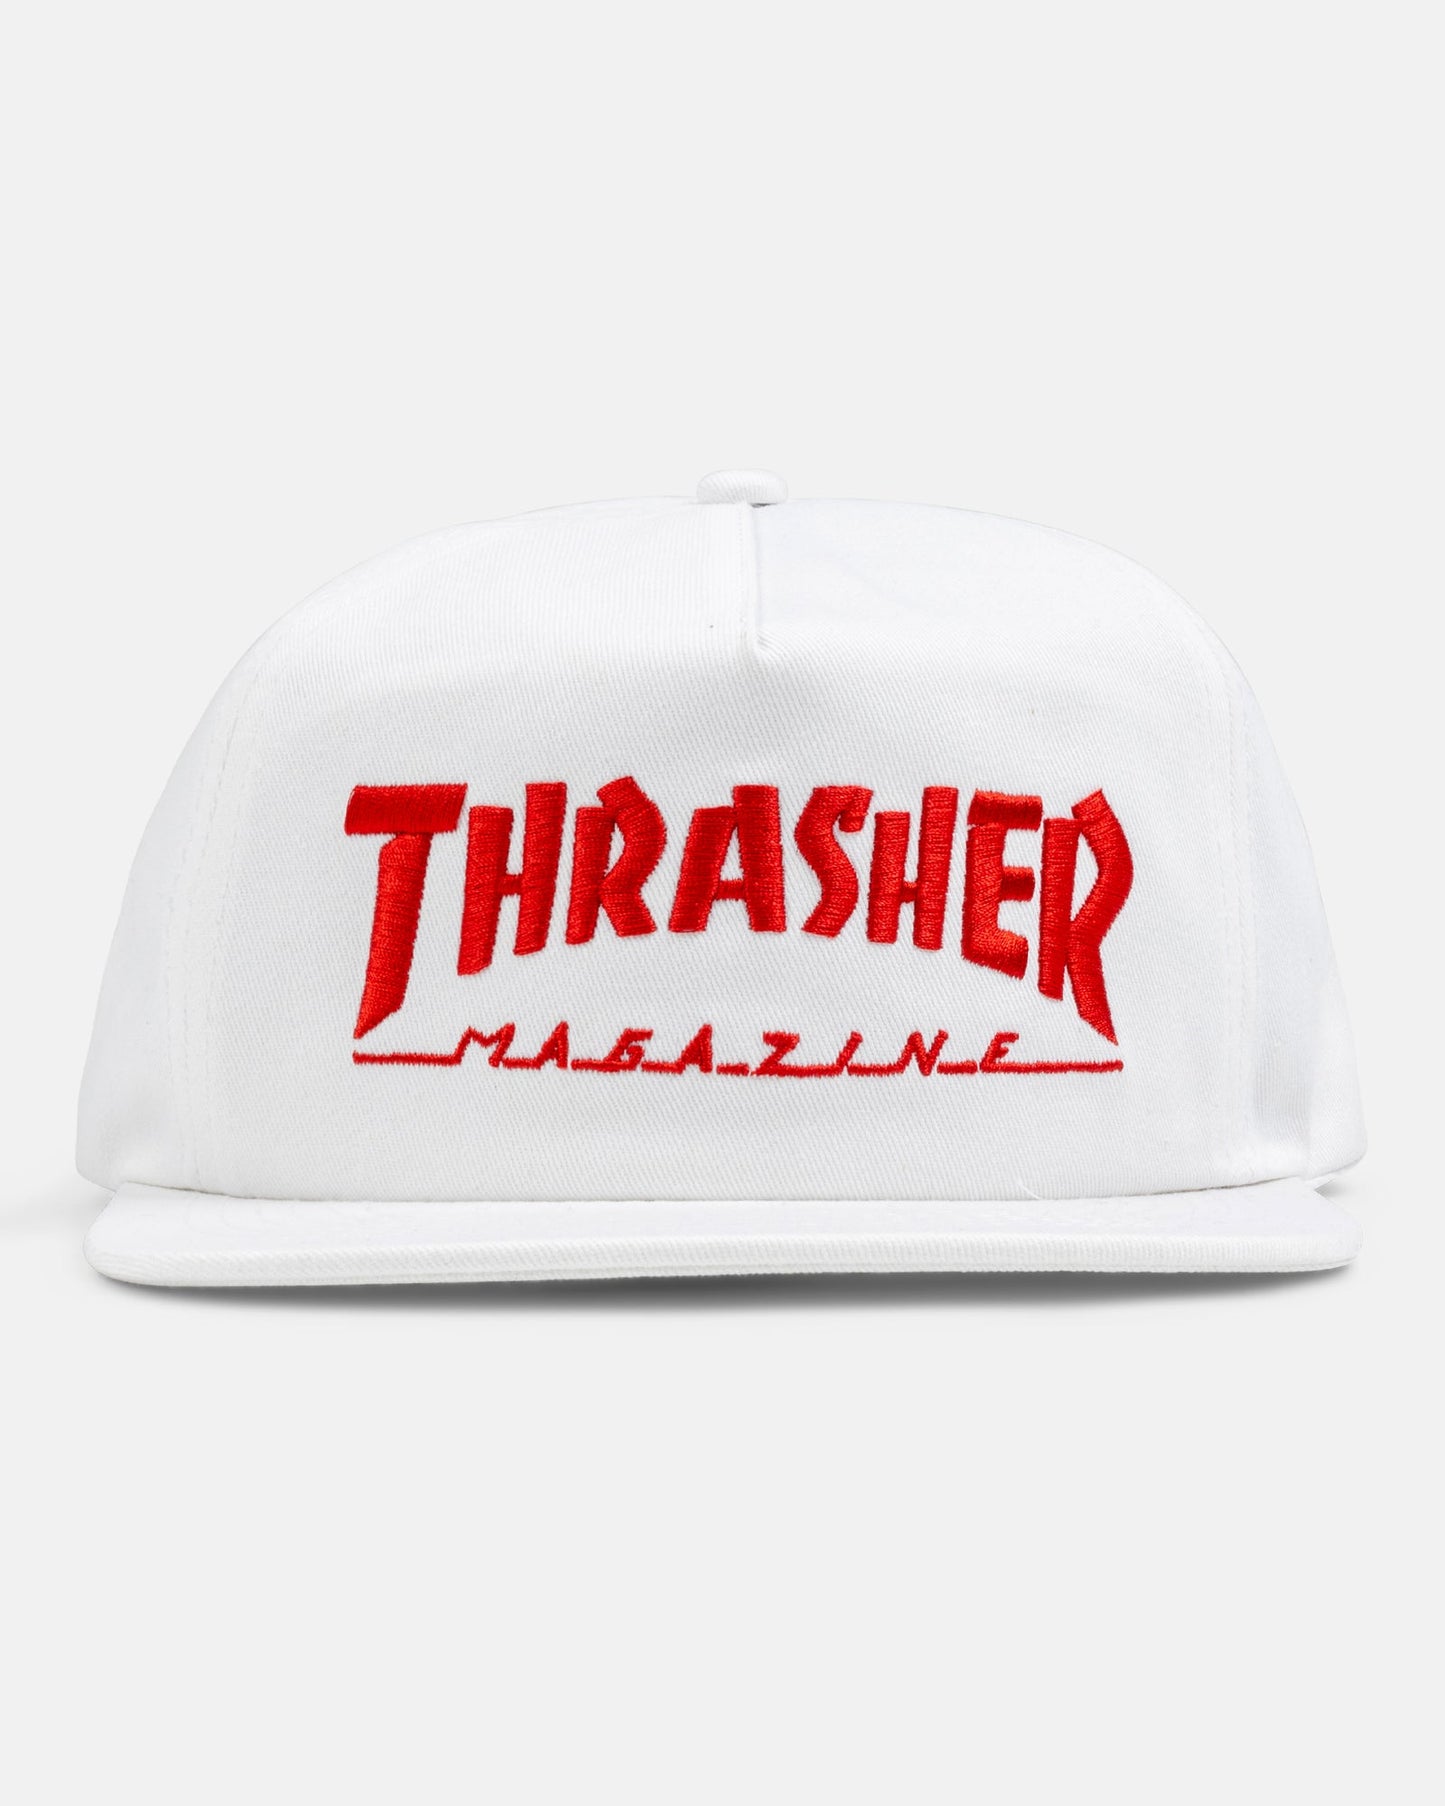 Thrasher Mag Logo 5 Panel Snapback Hat - White/Red